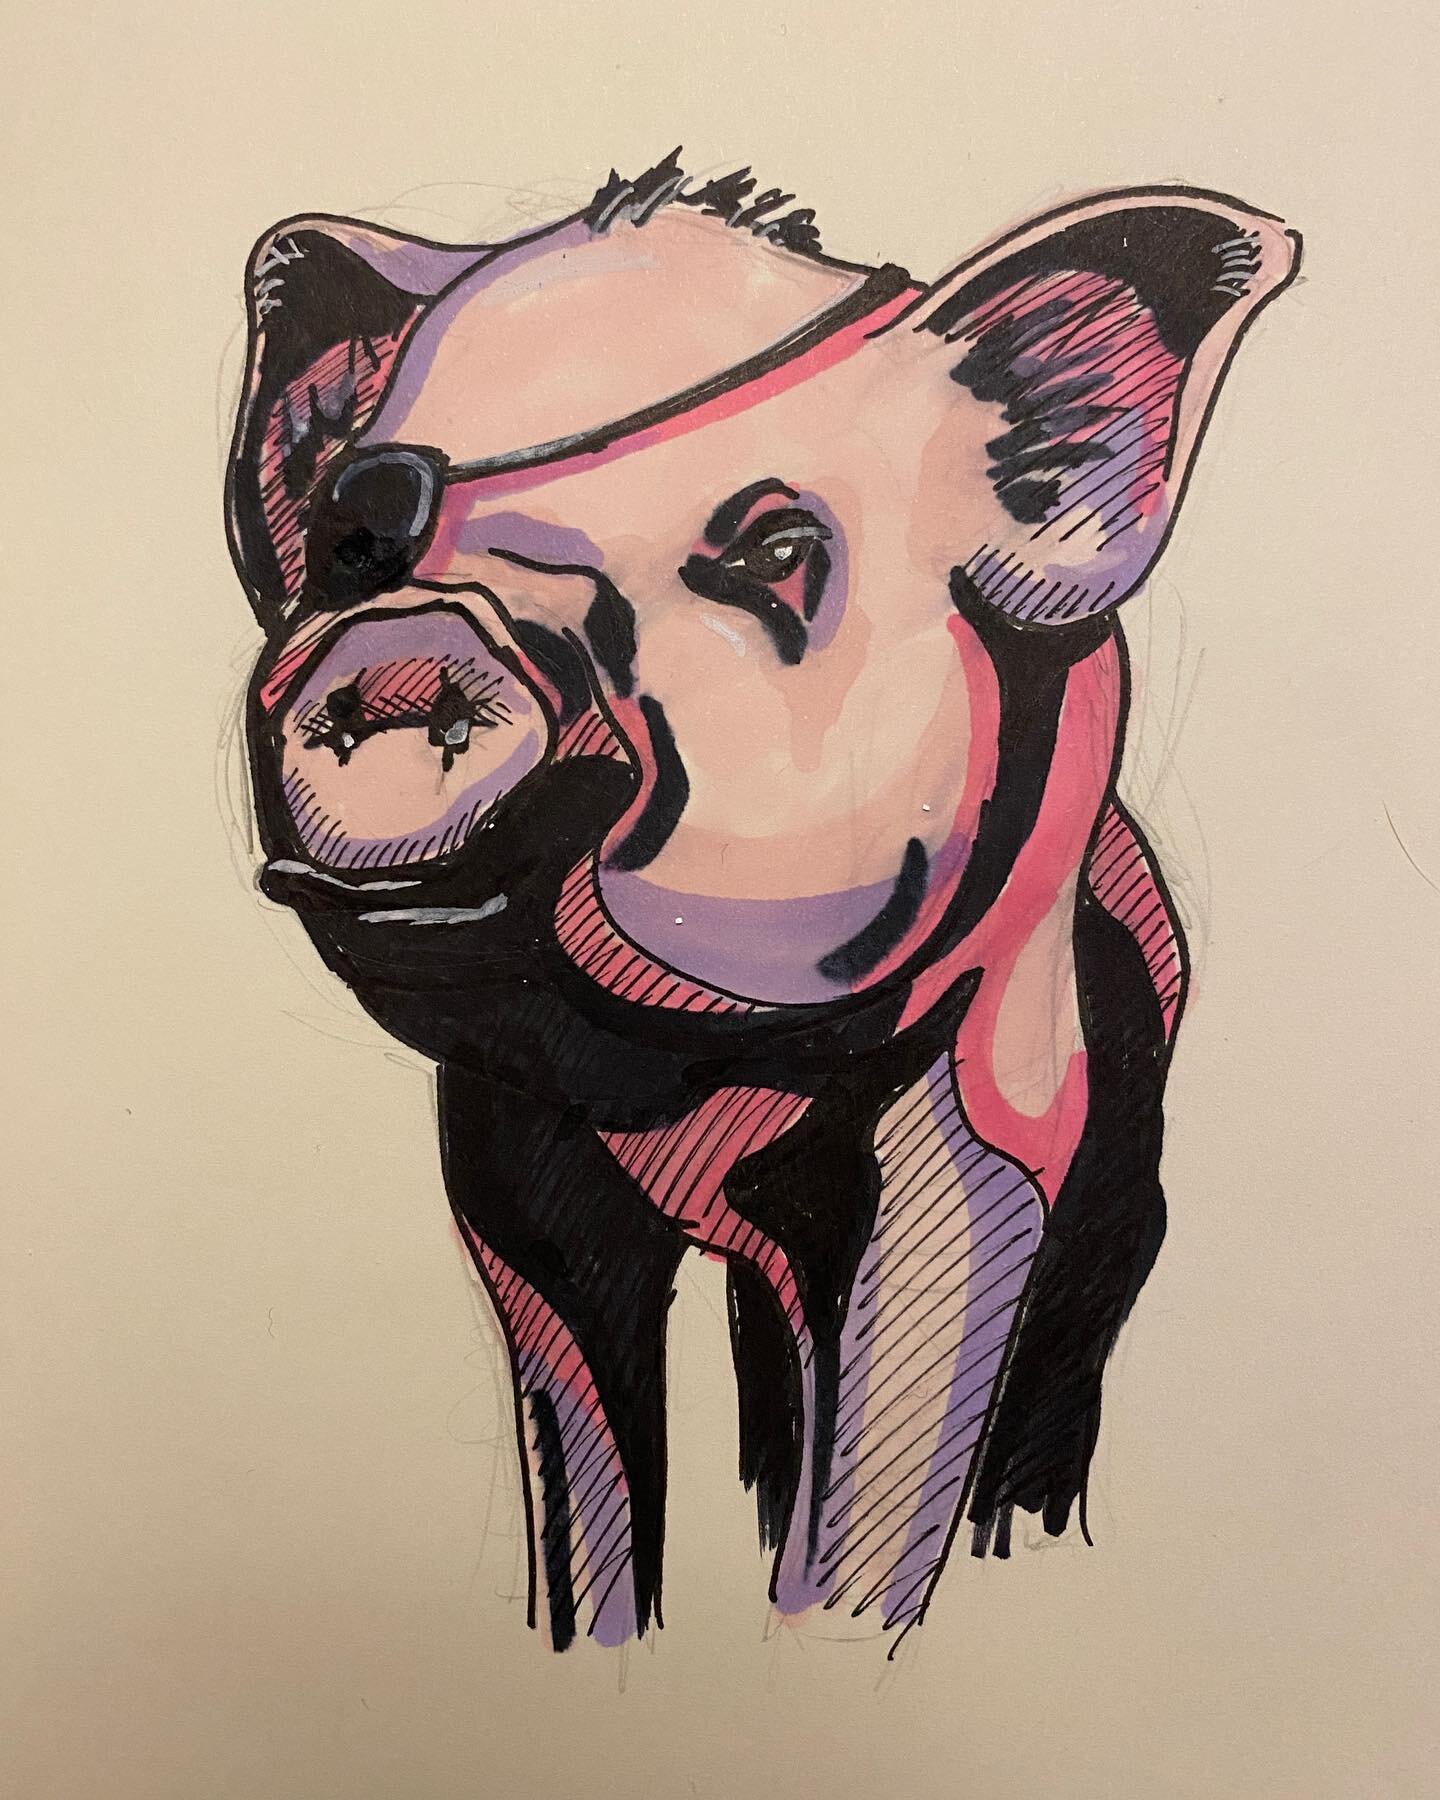 Something a little different for me. Piglet of doom? 🐷
.
.#pig #pigart #pigdrawing #farmart #farmanimals
.
.
. 
. 
#sketch #ink #ocnyarts #hudsonvalleyart #nyartist #warwickartist #arttobuy #hudsonvalleyartist #customart #art #customgift #blackworkn